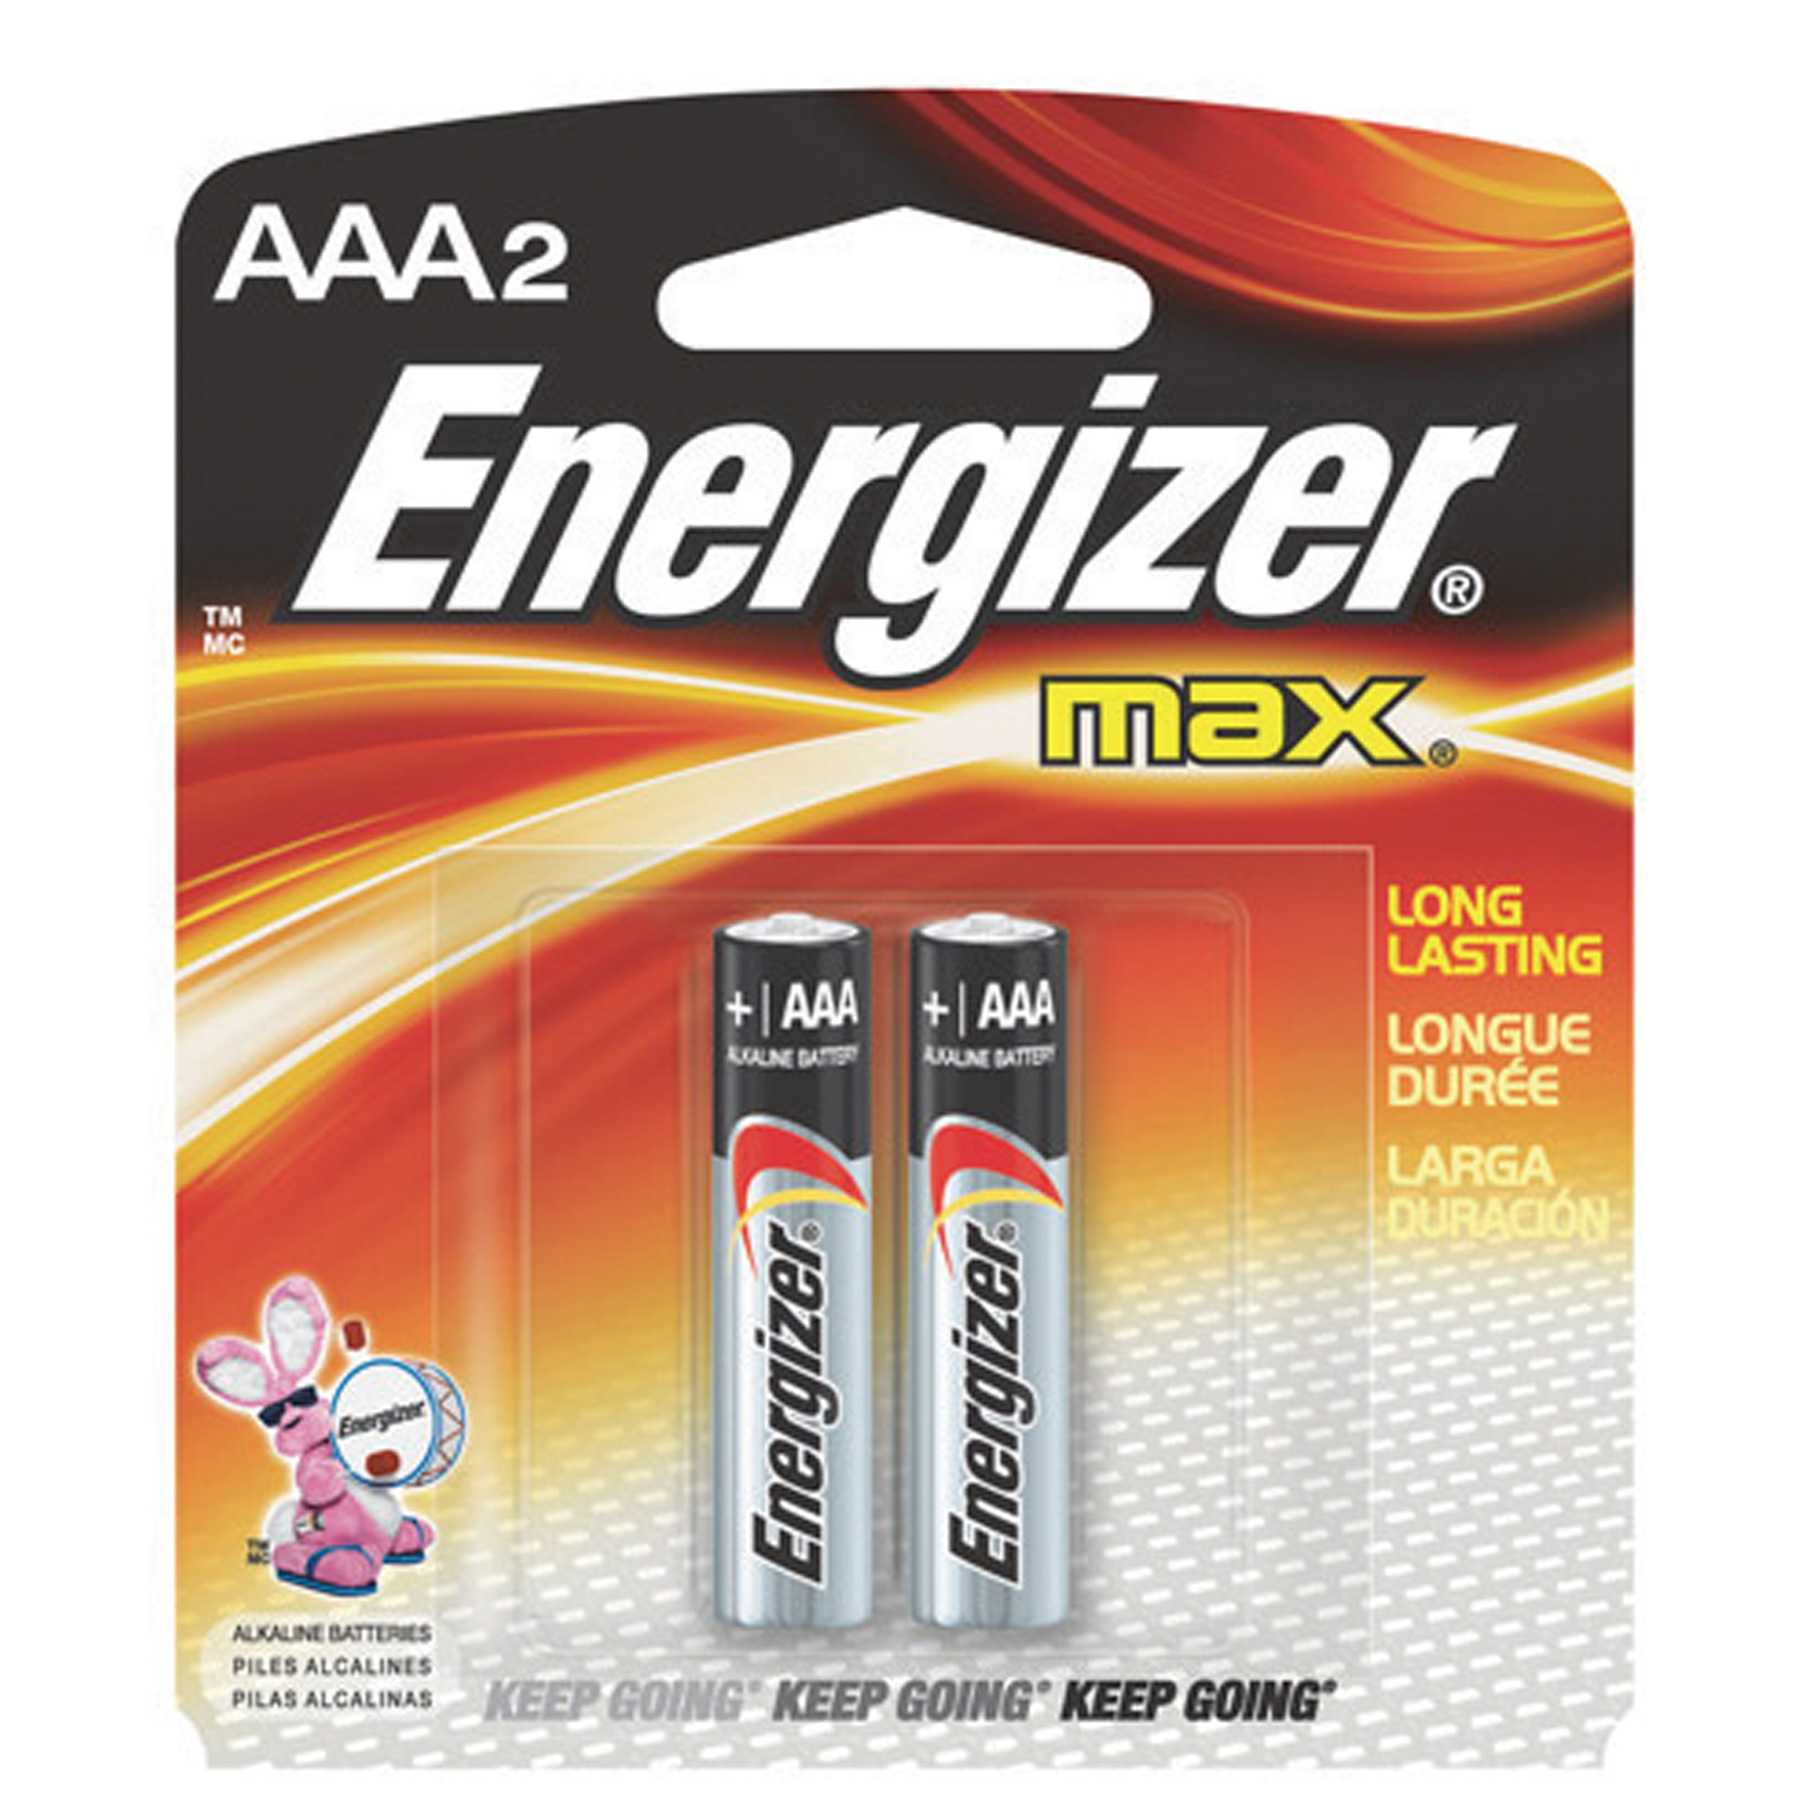 BATTERY ENERGIZER 2-AAA